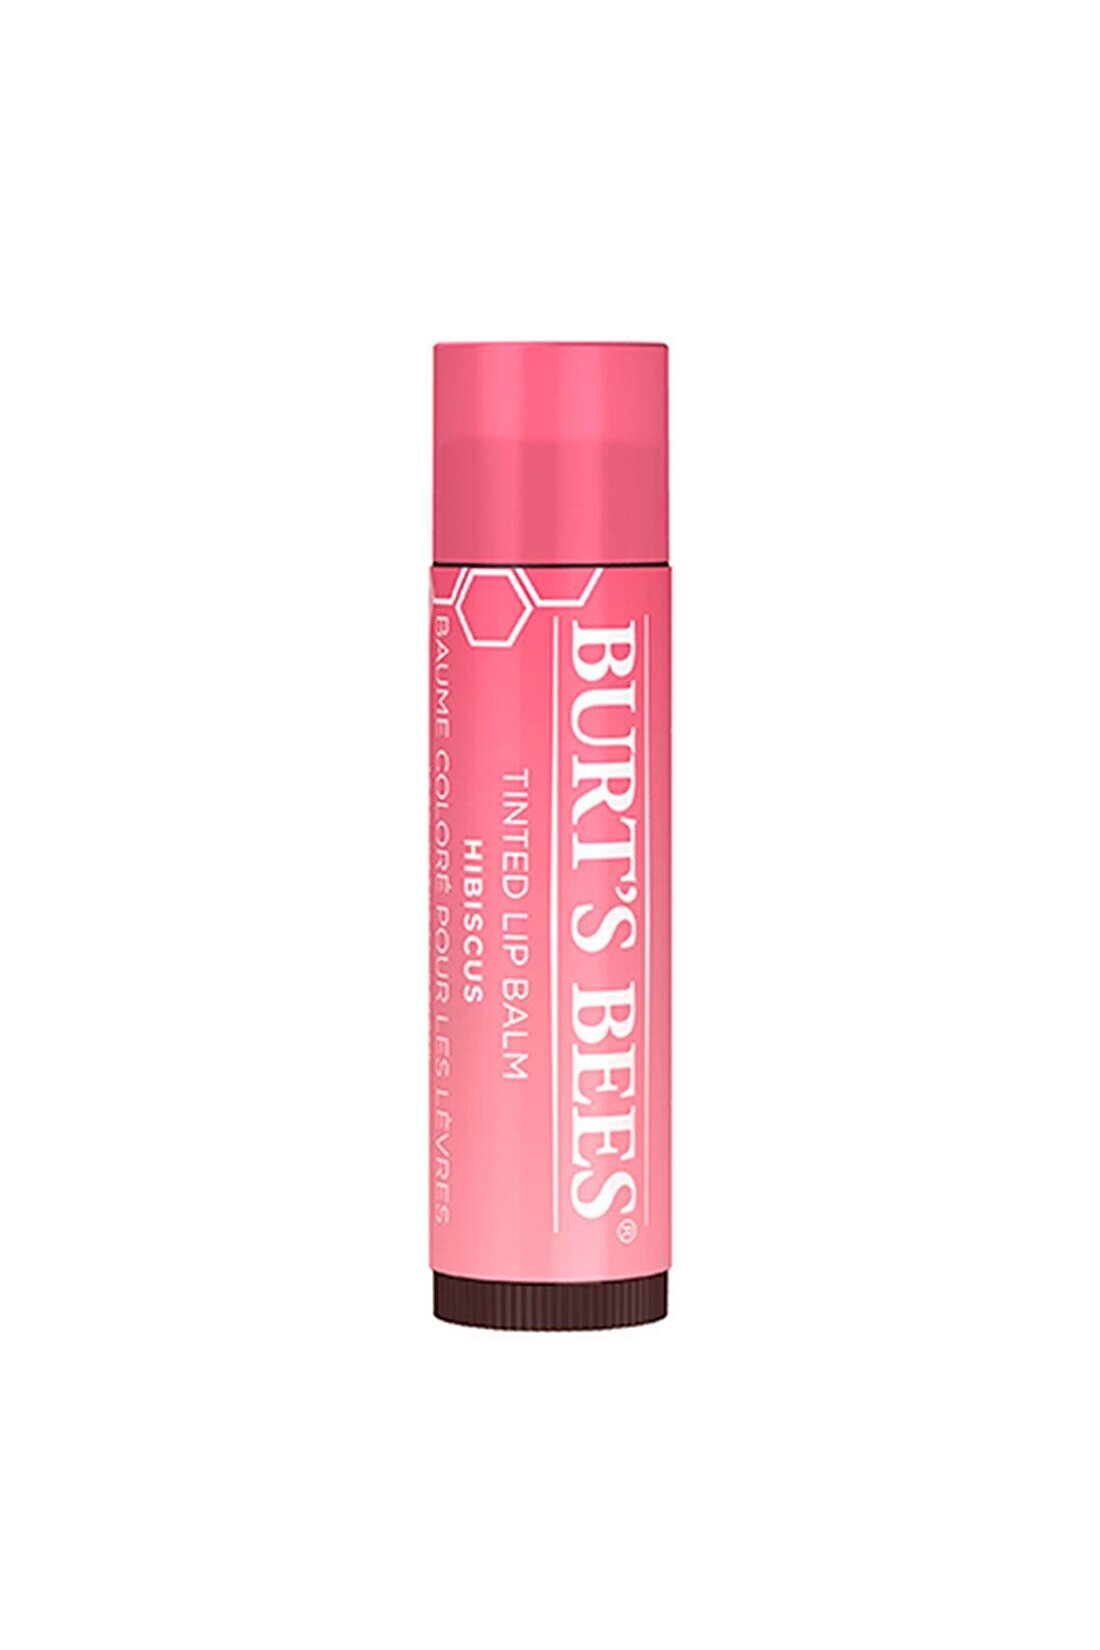 Burts Bees Renkli Dudak Bakımı Gül Kurusu - Tinted Lip Balm Hibiscus 4,25 G